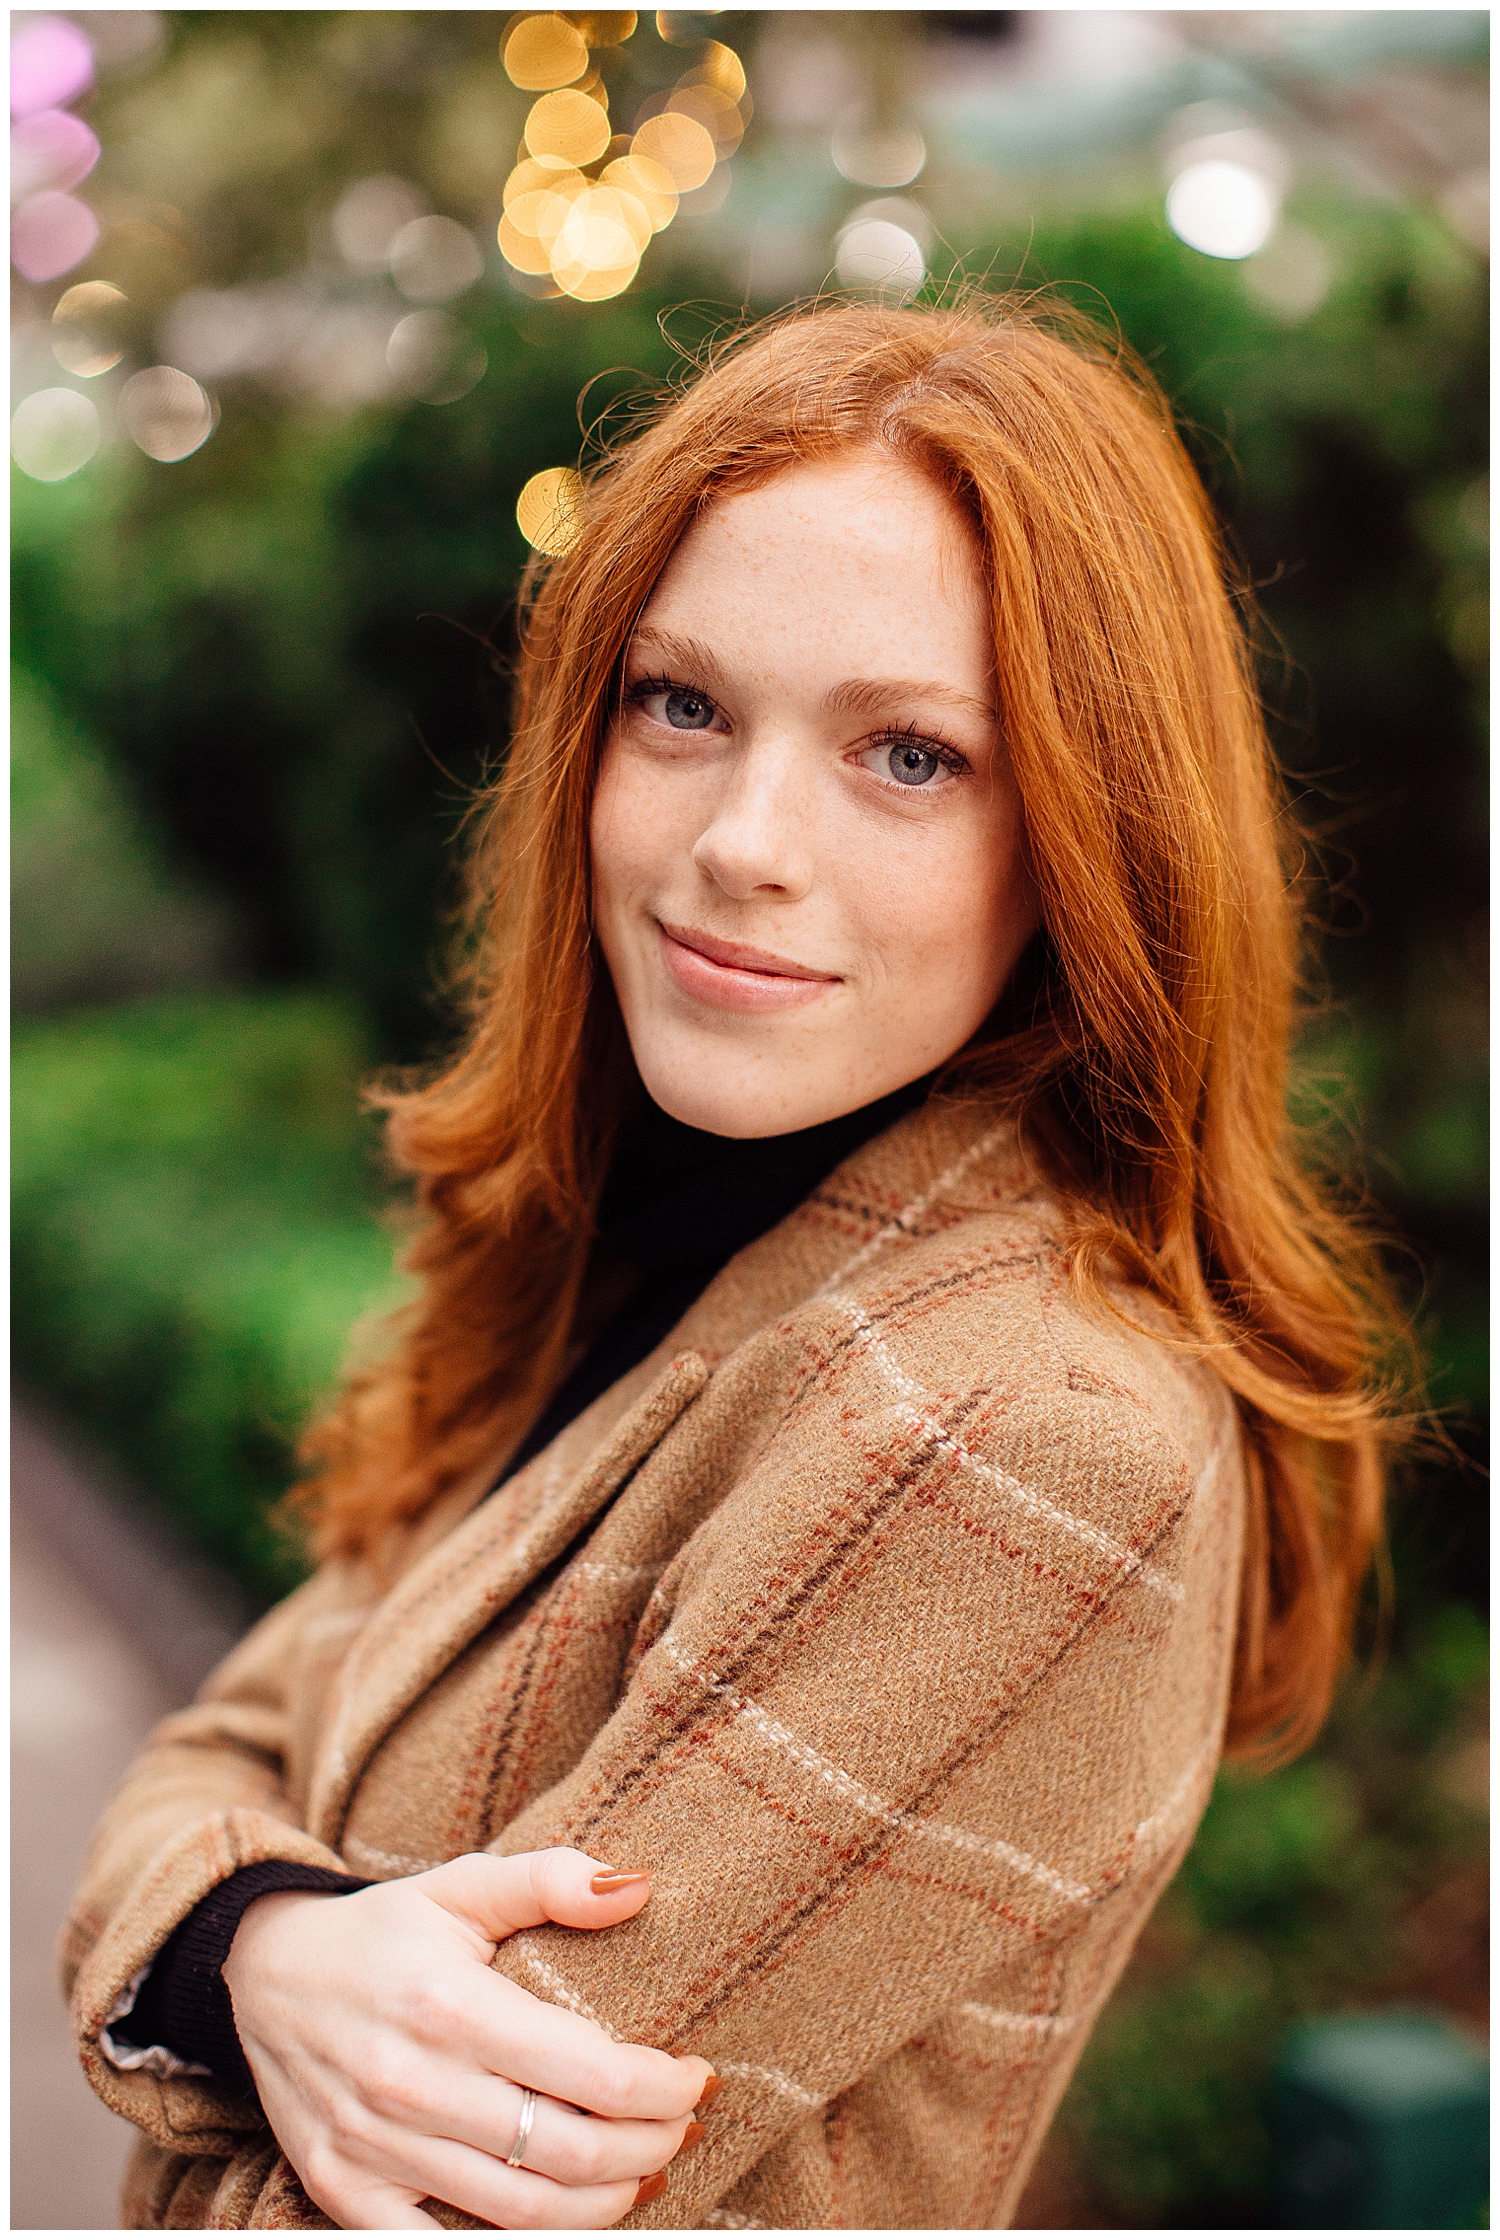 senior girl with red hair smiling at camera in brown tweed jackeet